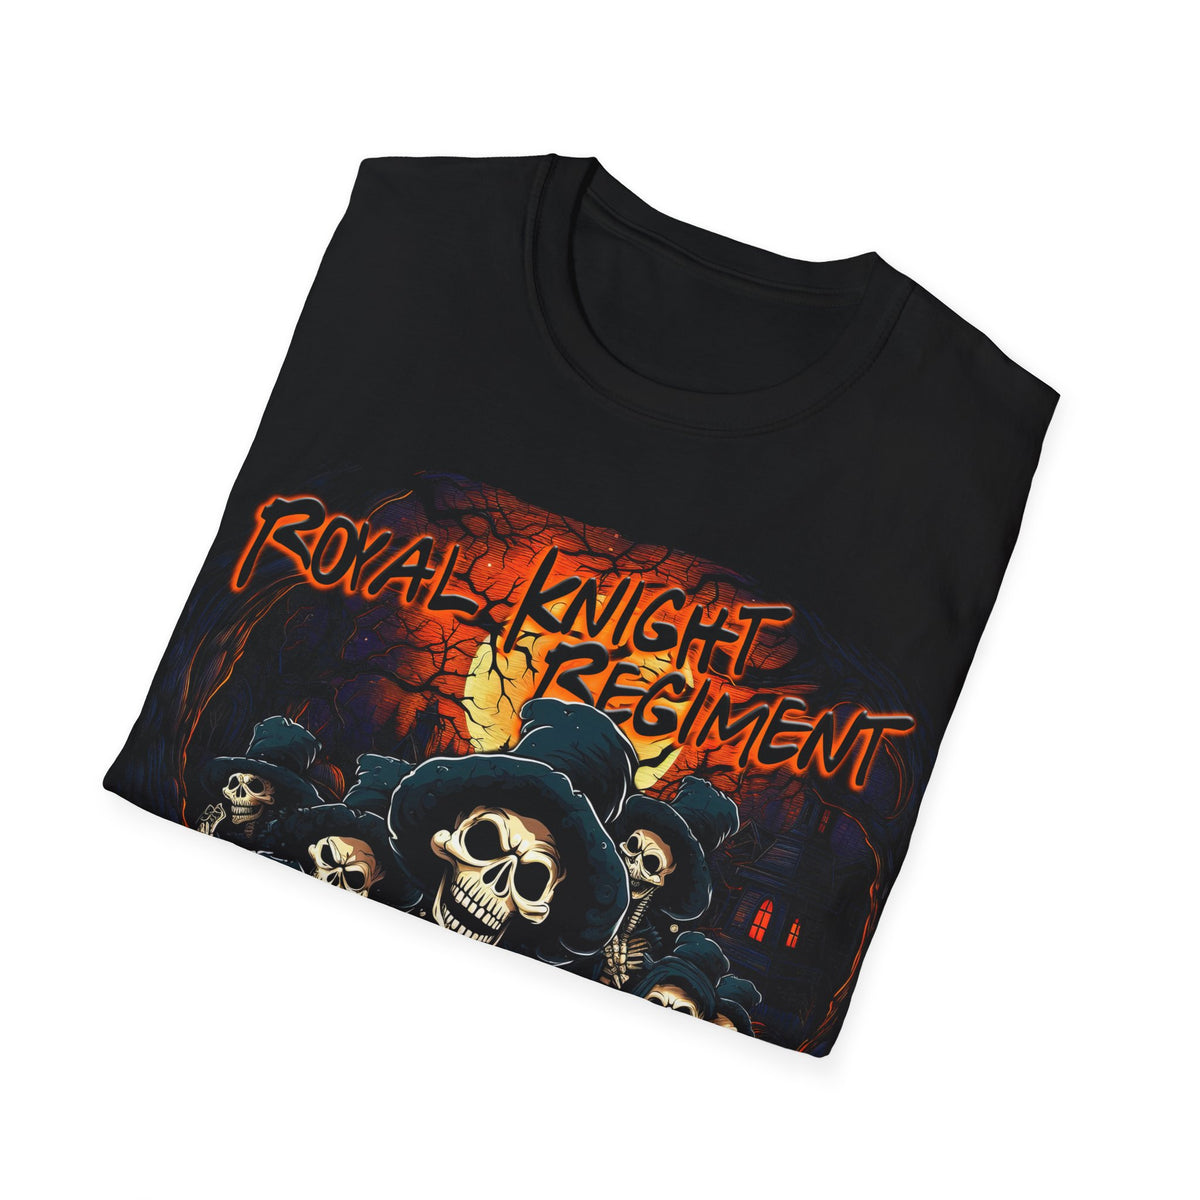 Exclusive Royal Knight Regiment Halloween T-Shirt